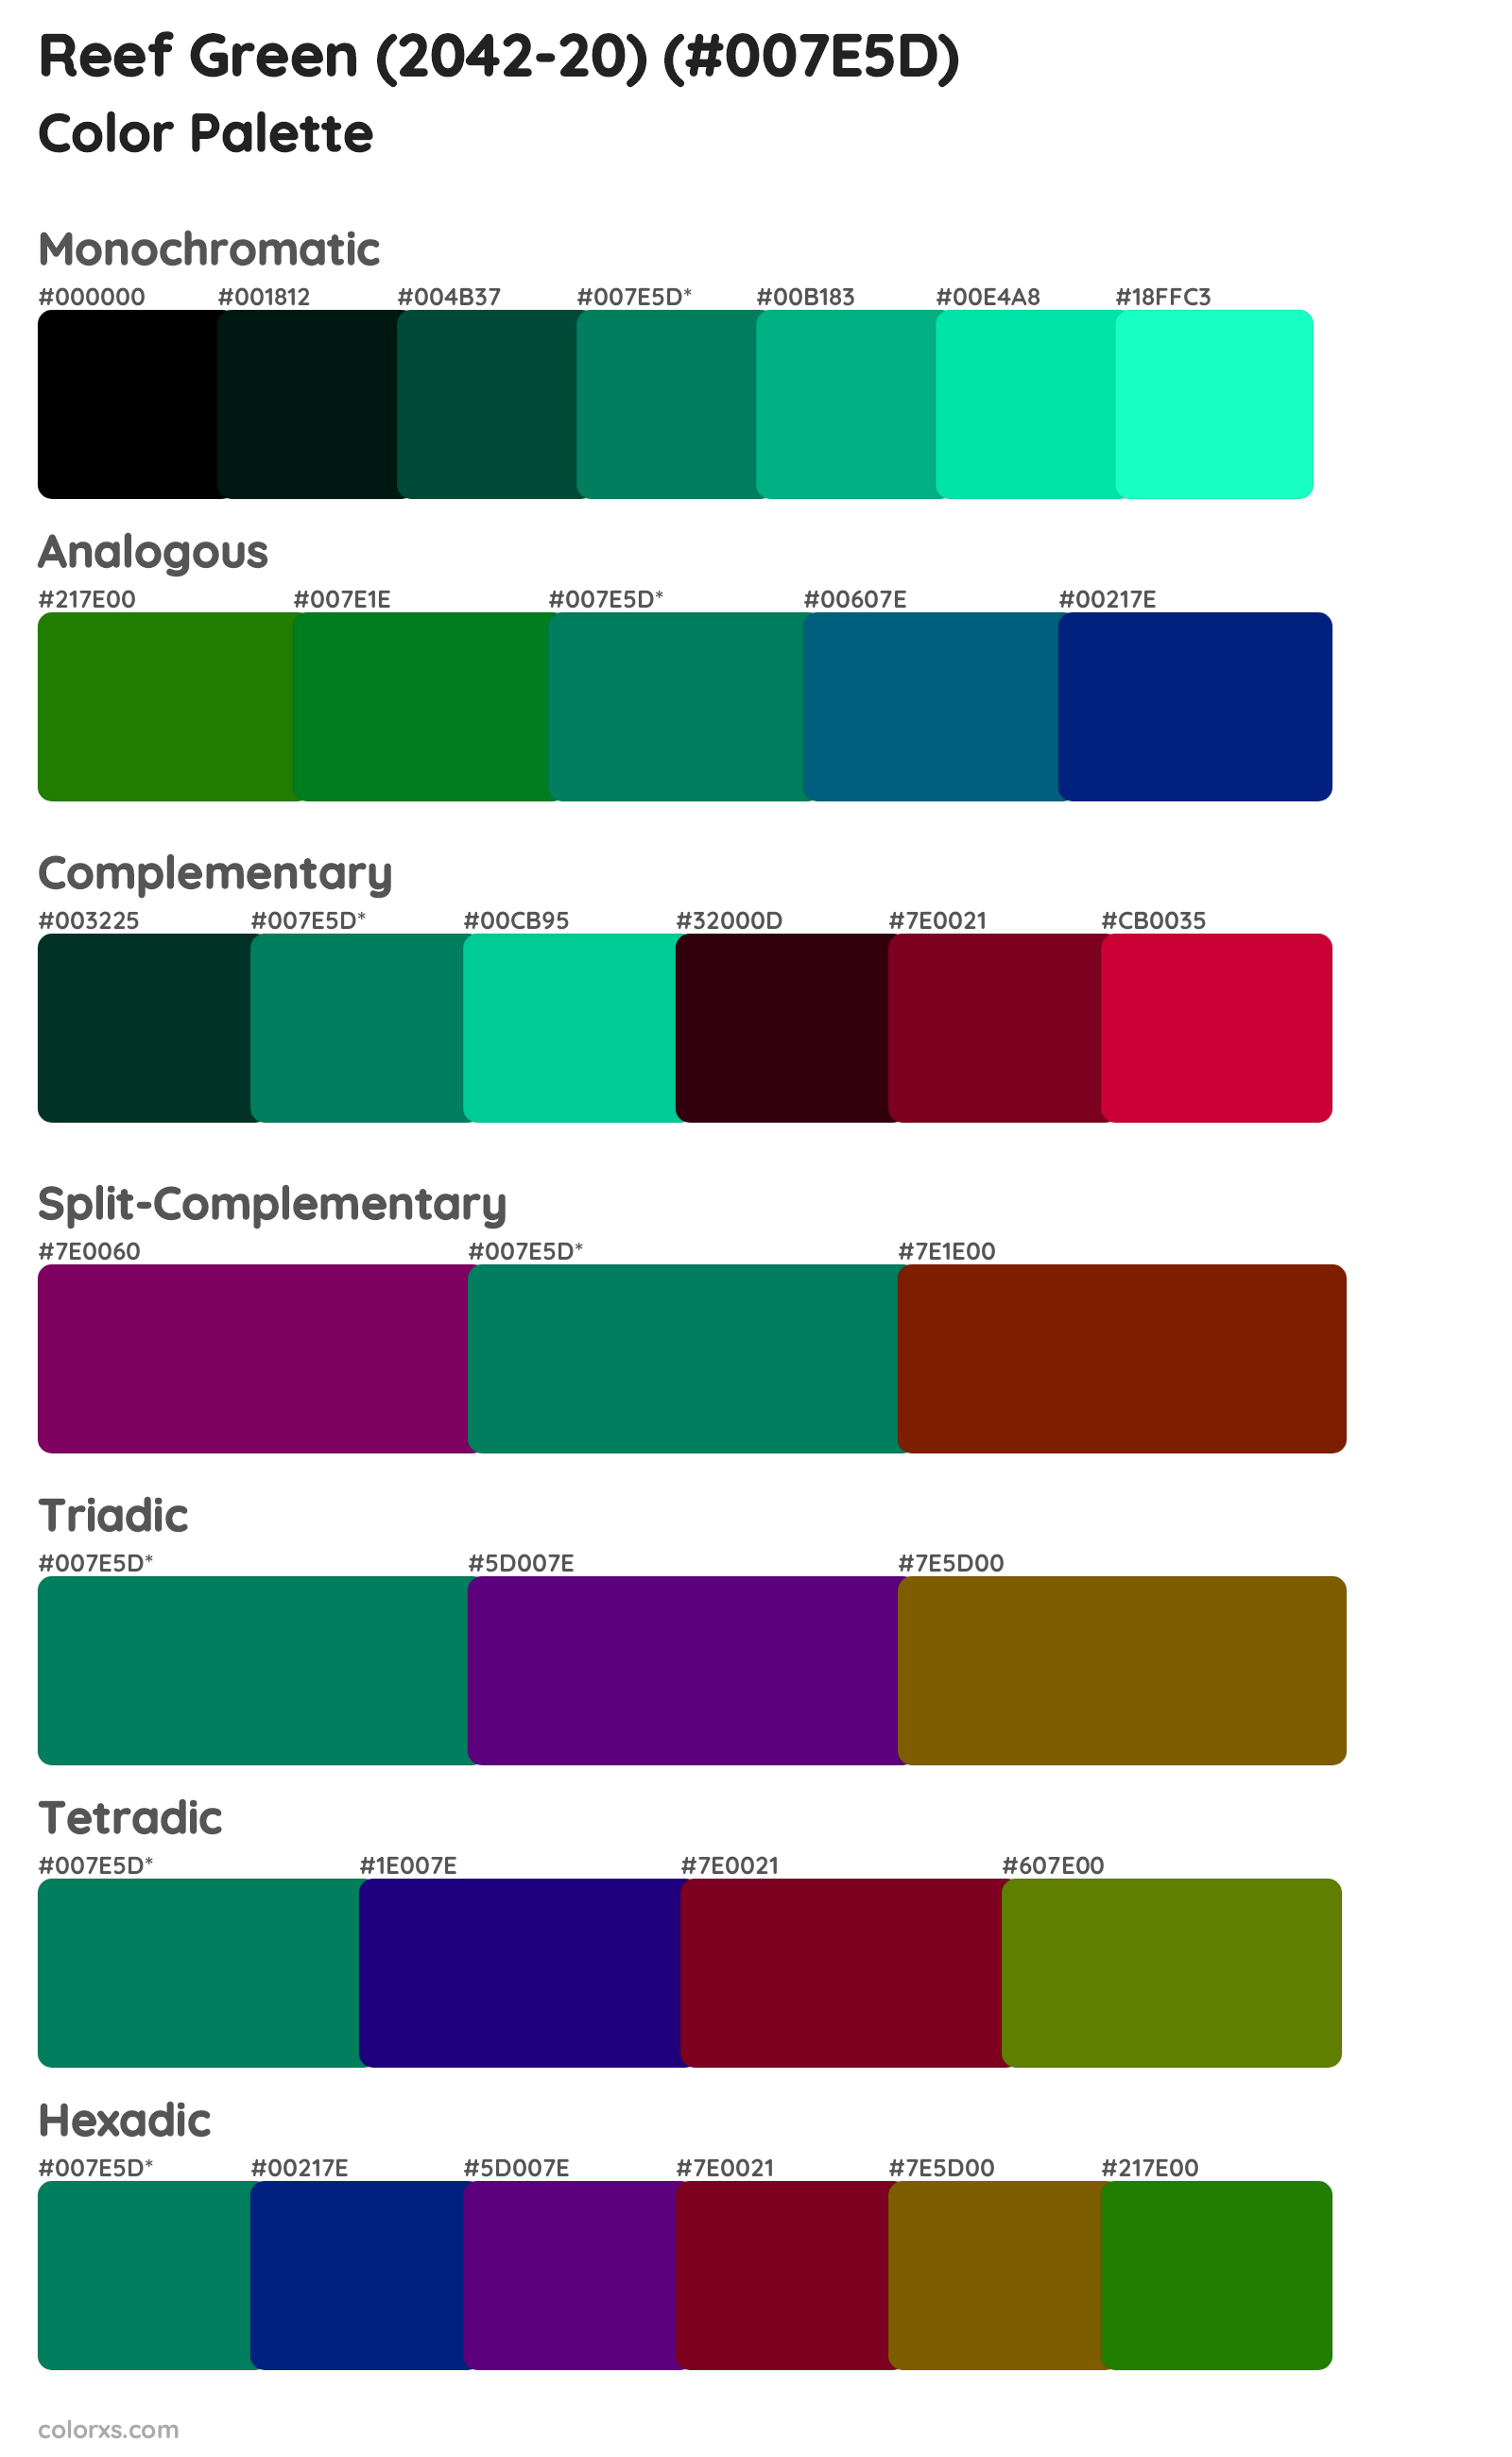 Reef Green (2042-20) Color Scheme Palettes